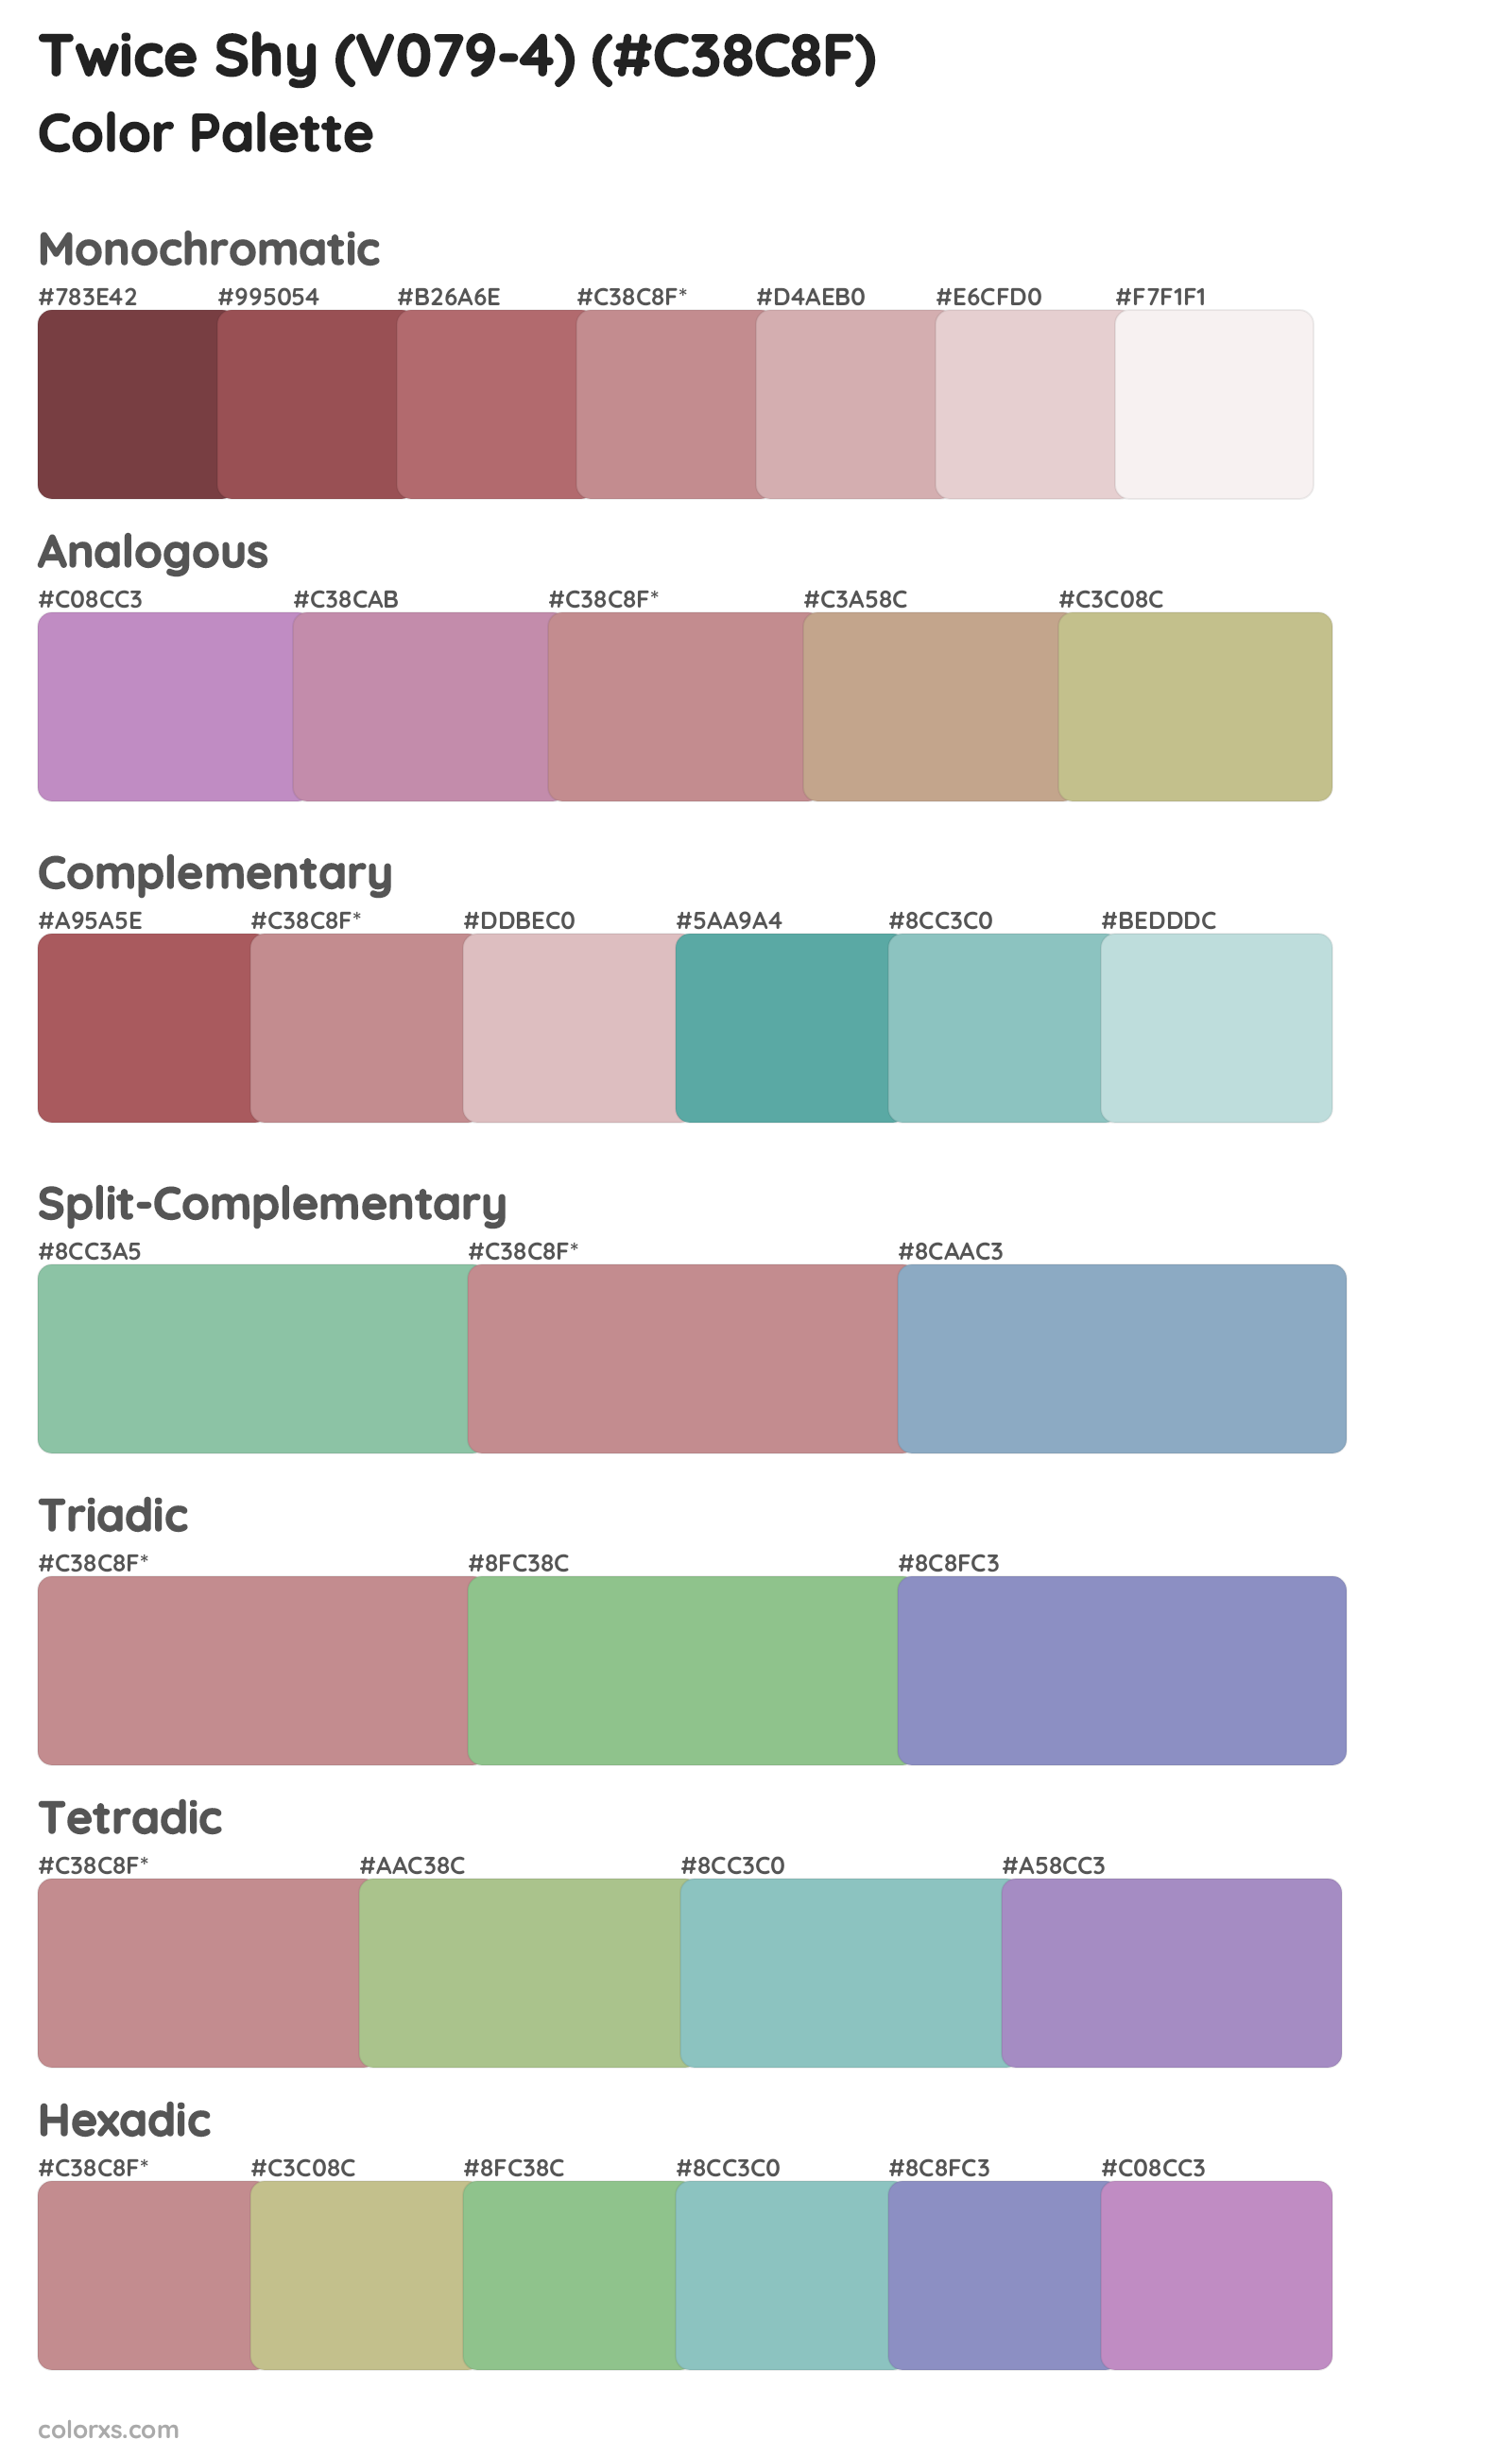 Twice Shy (V079-4) Color Scheme Palettes